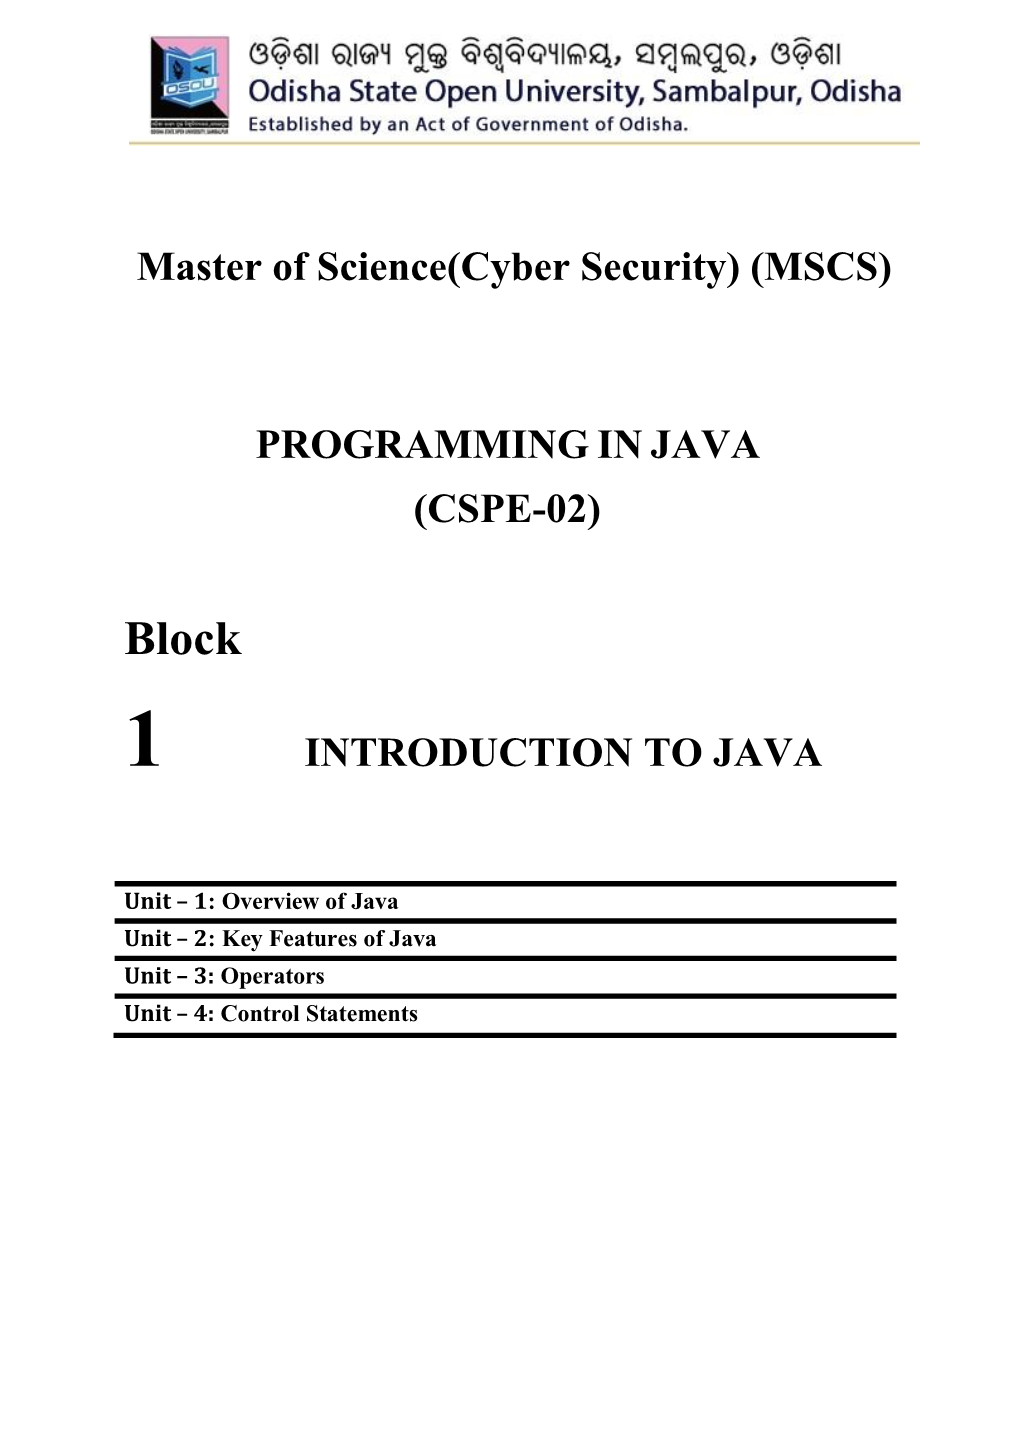 Programming in Java (Cspe-02)